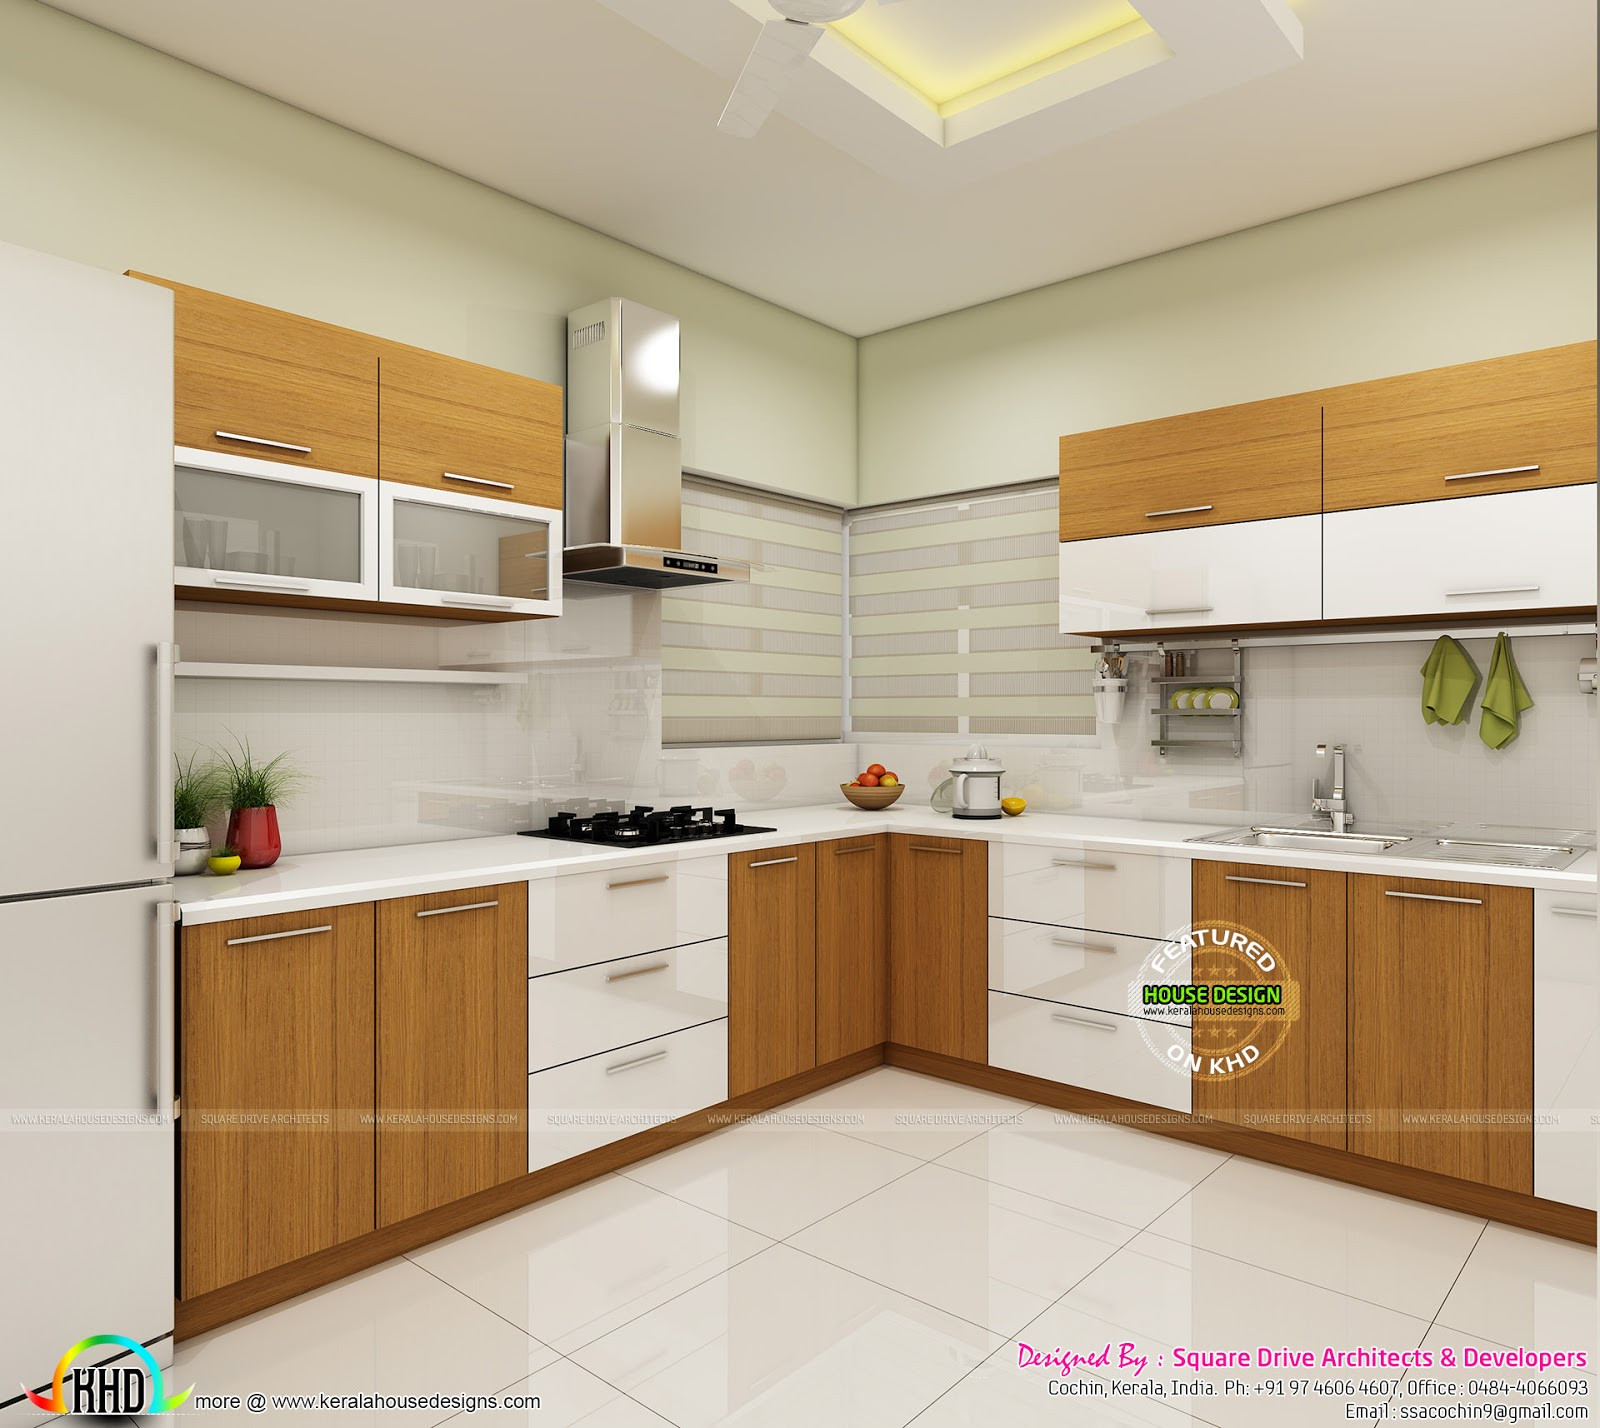 Interior Design Ideas For Kitchen
 Modern home interiors of bedroom dining kitchen Kerala